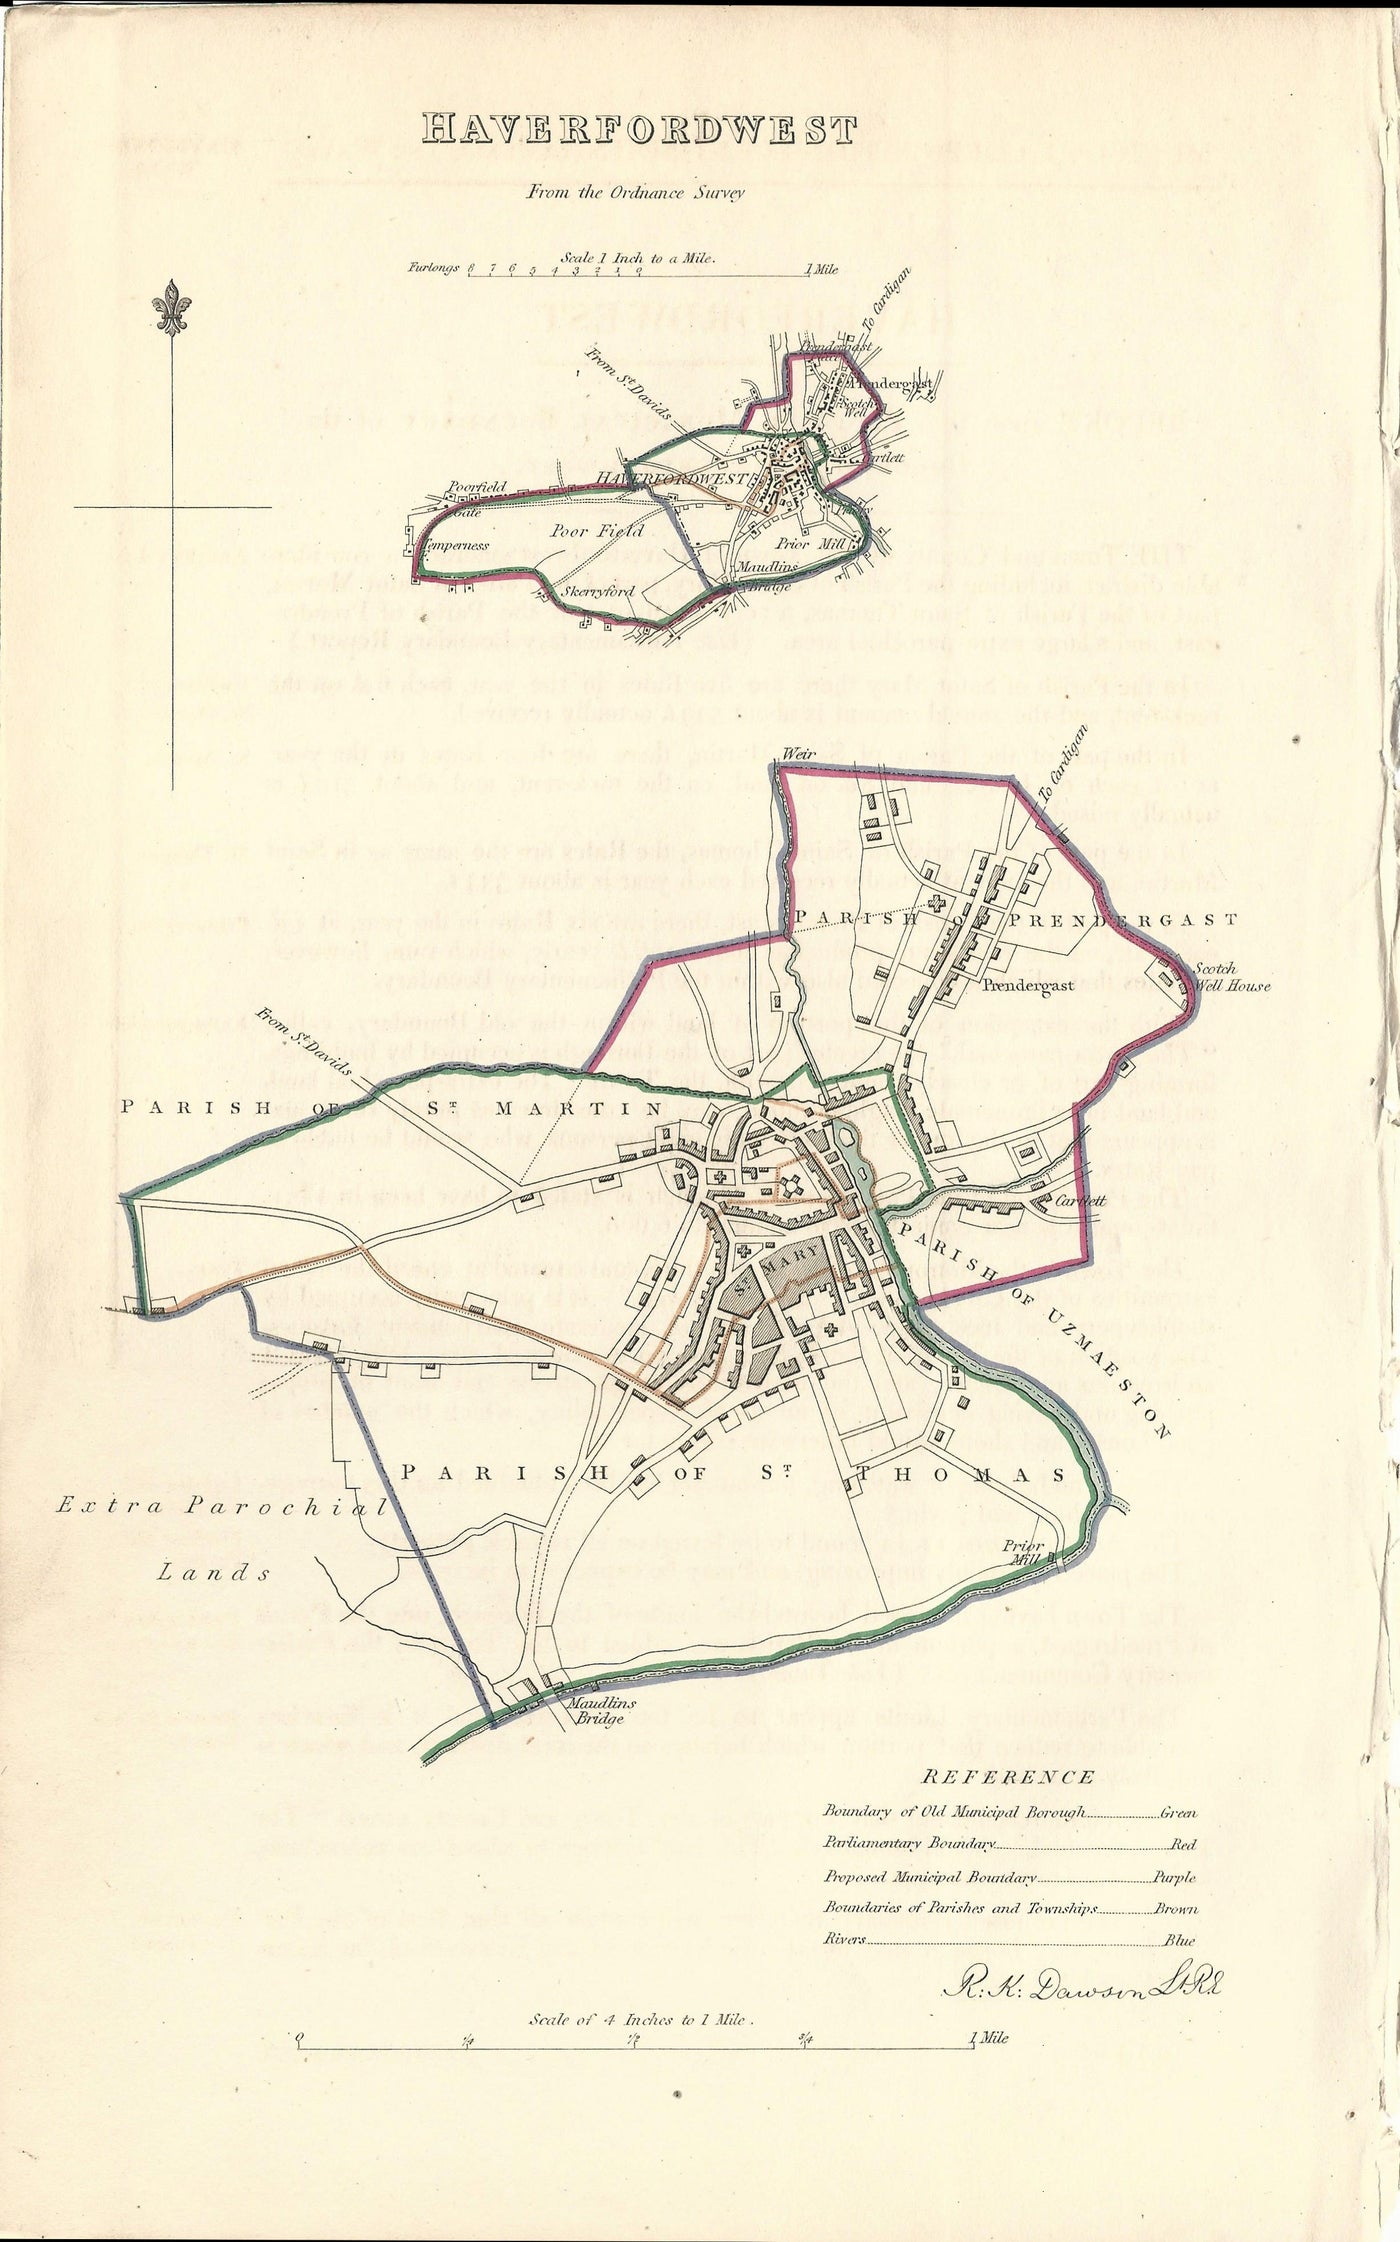 Haverfordwest Ordnance Survey antique map 1837